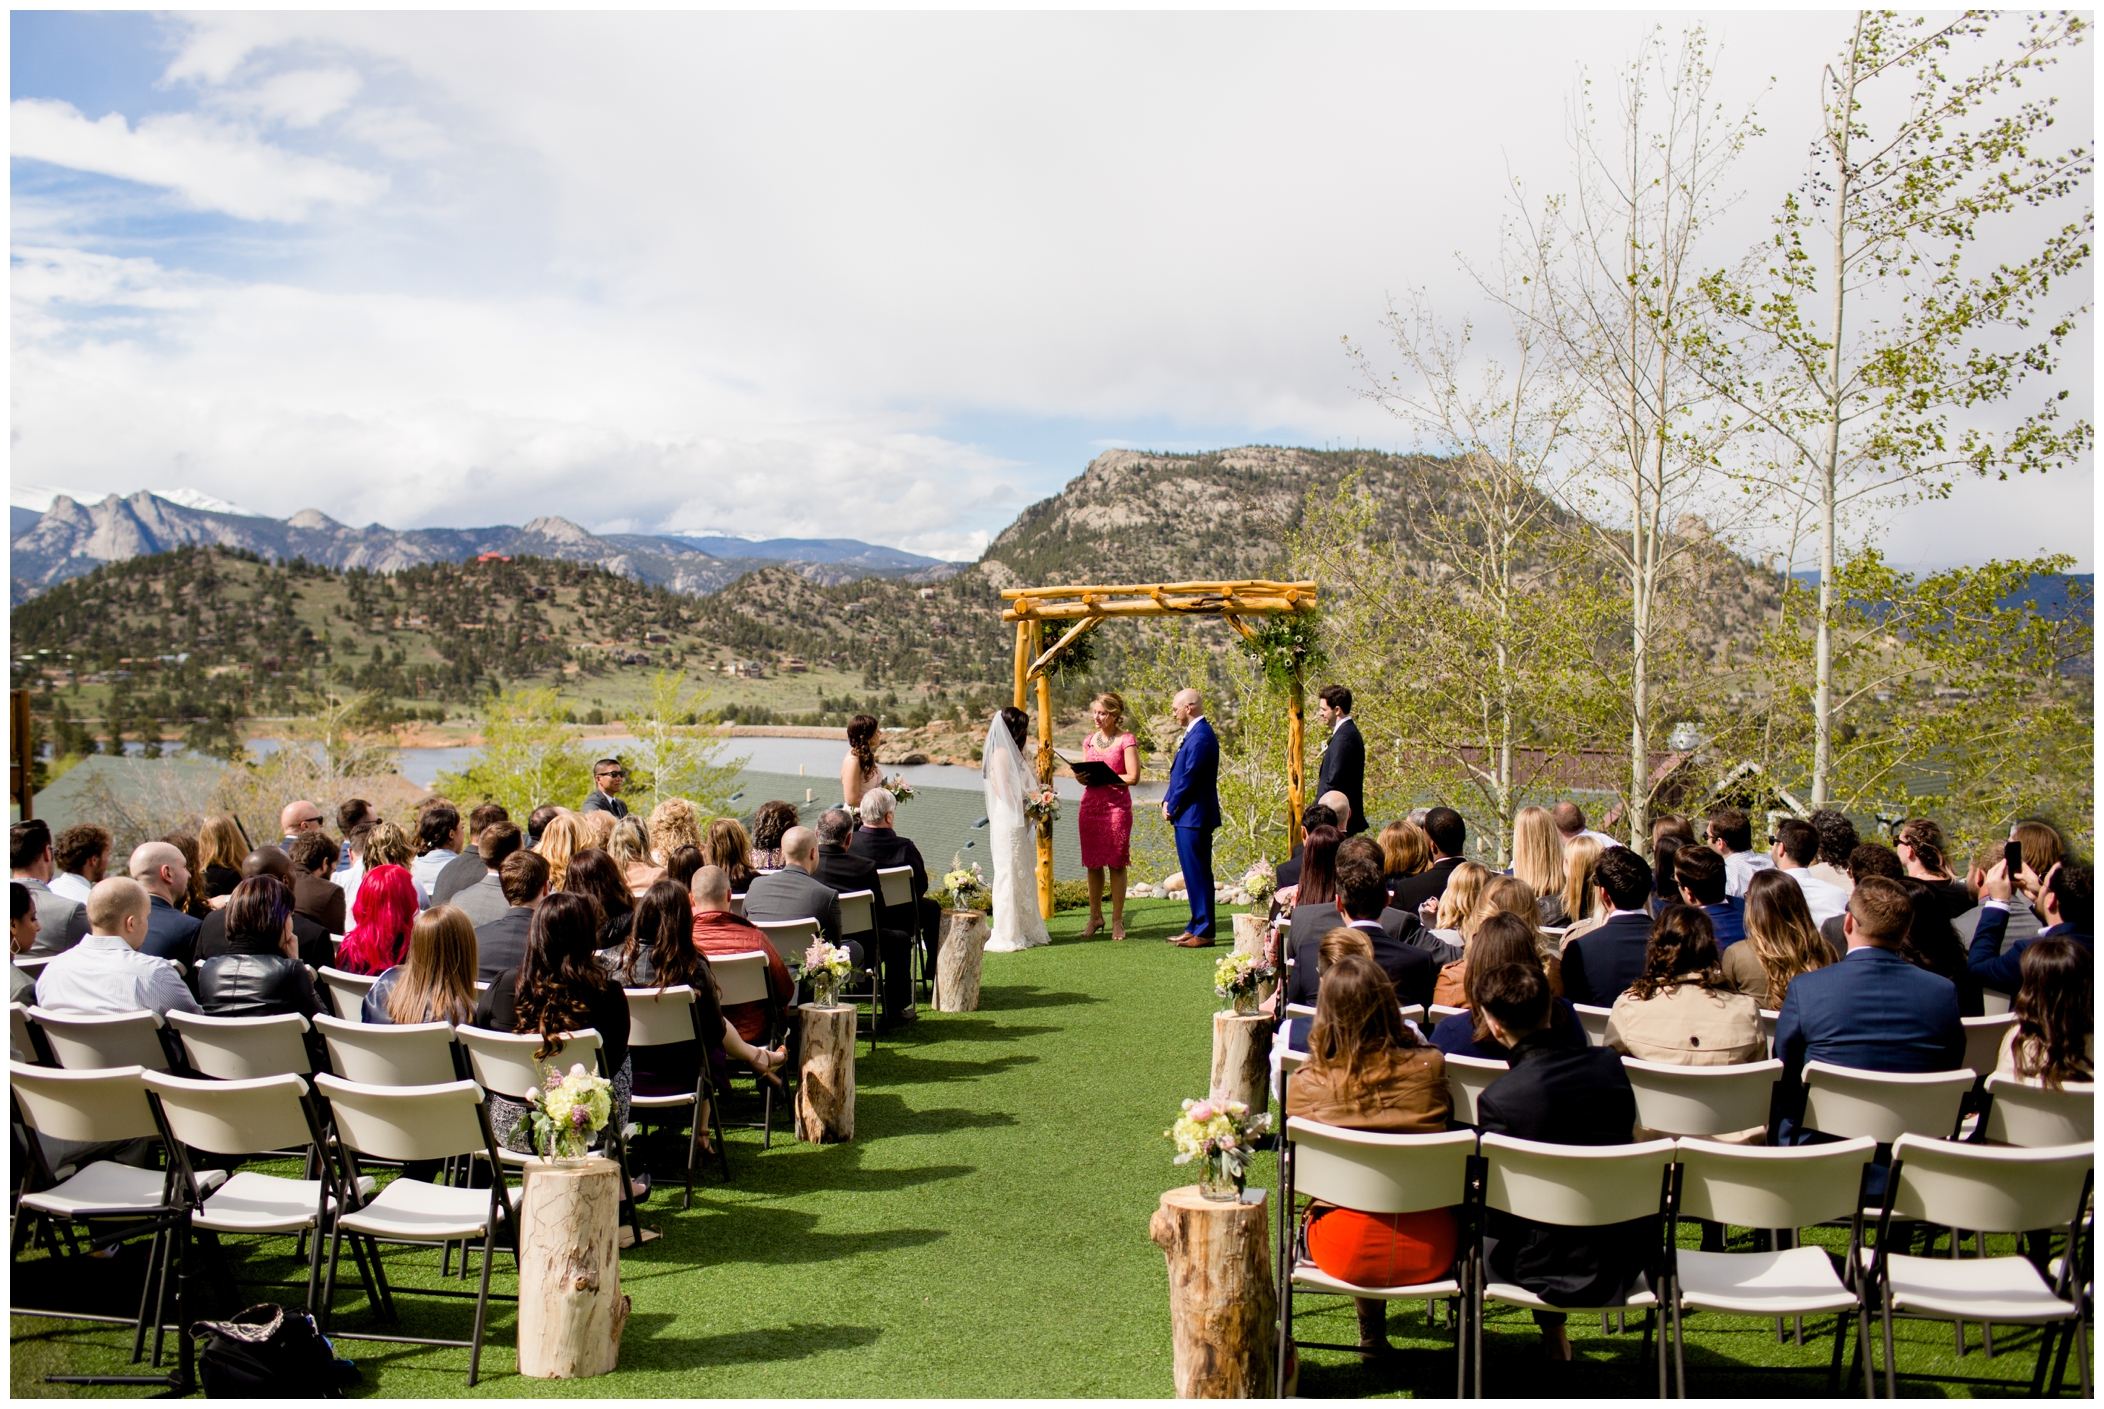 mary's lake lodge Colorado wedding ceremony 